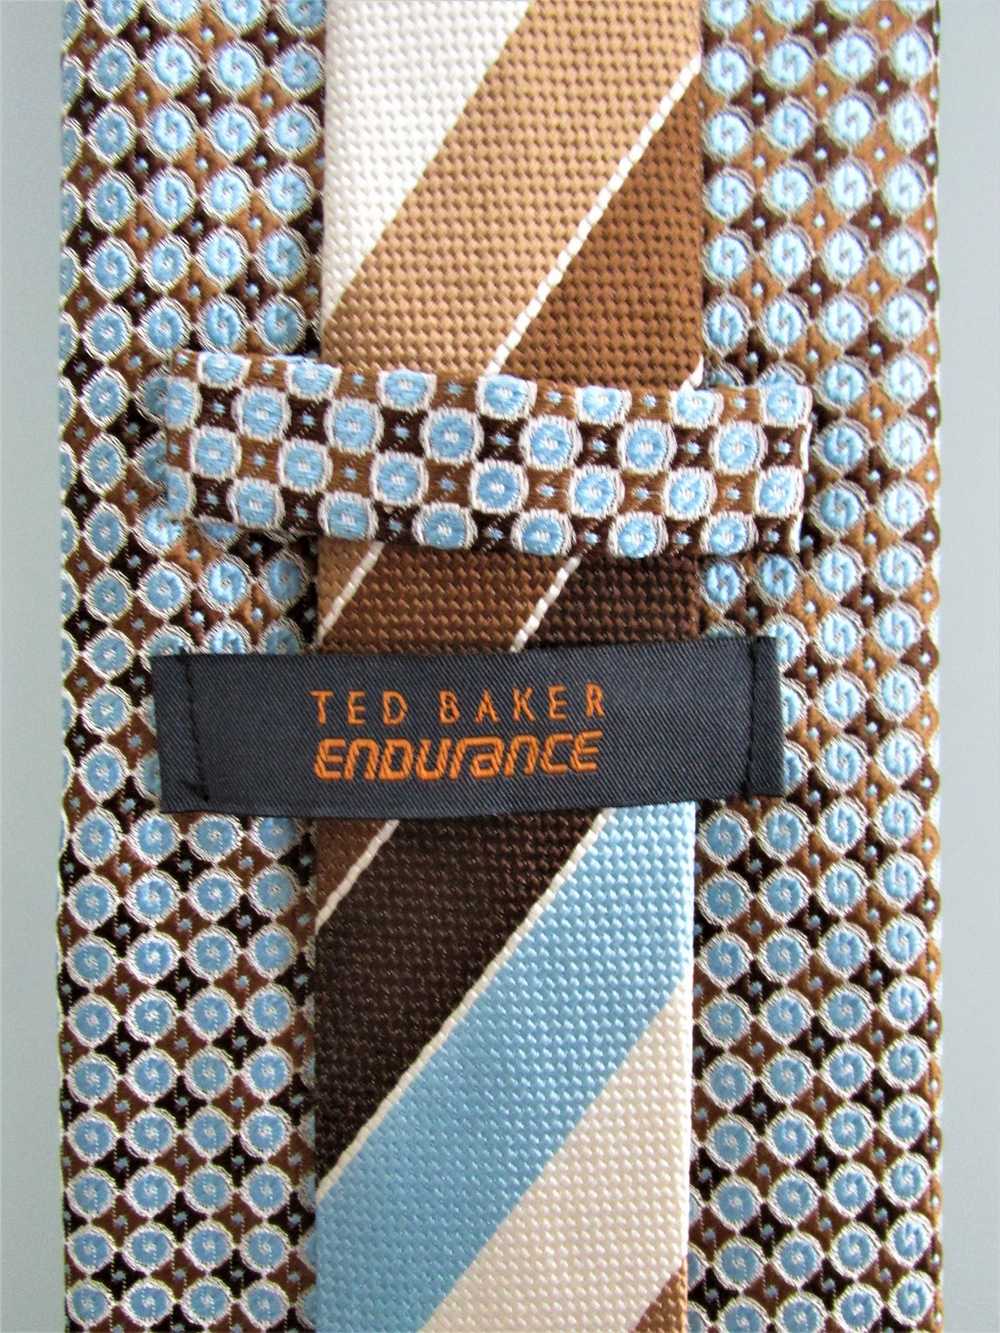 Ted Baker Ted Baker Men's Silk Tie - image 4